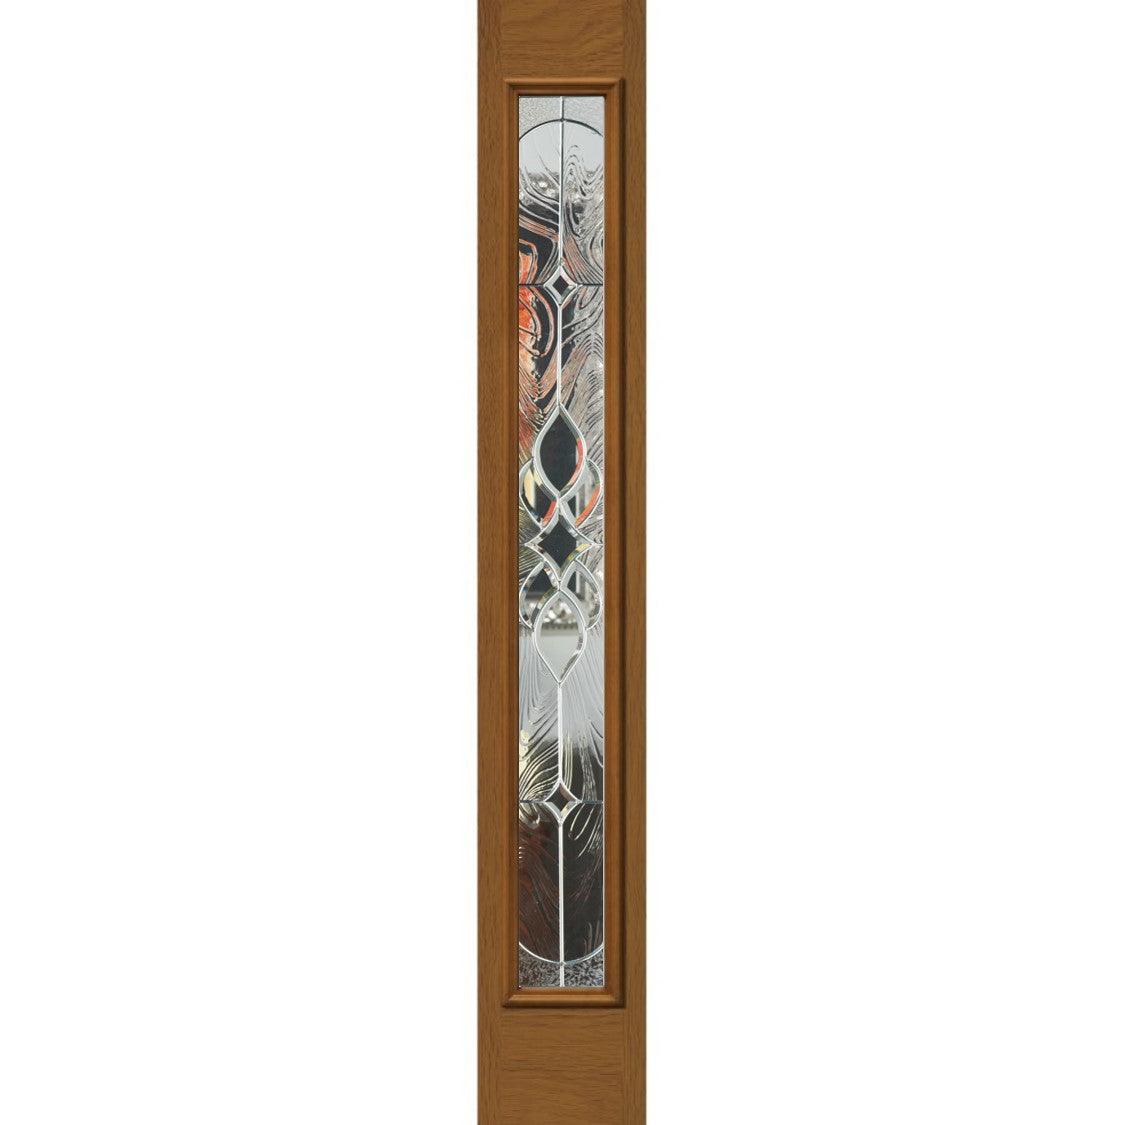 Saxon Glass and Frame Kit (Full Sidelite 9" x 66" Frame Size) - Pease Doors: The Door Store